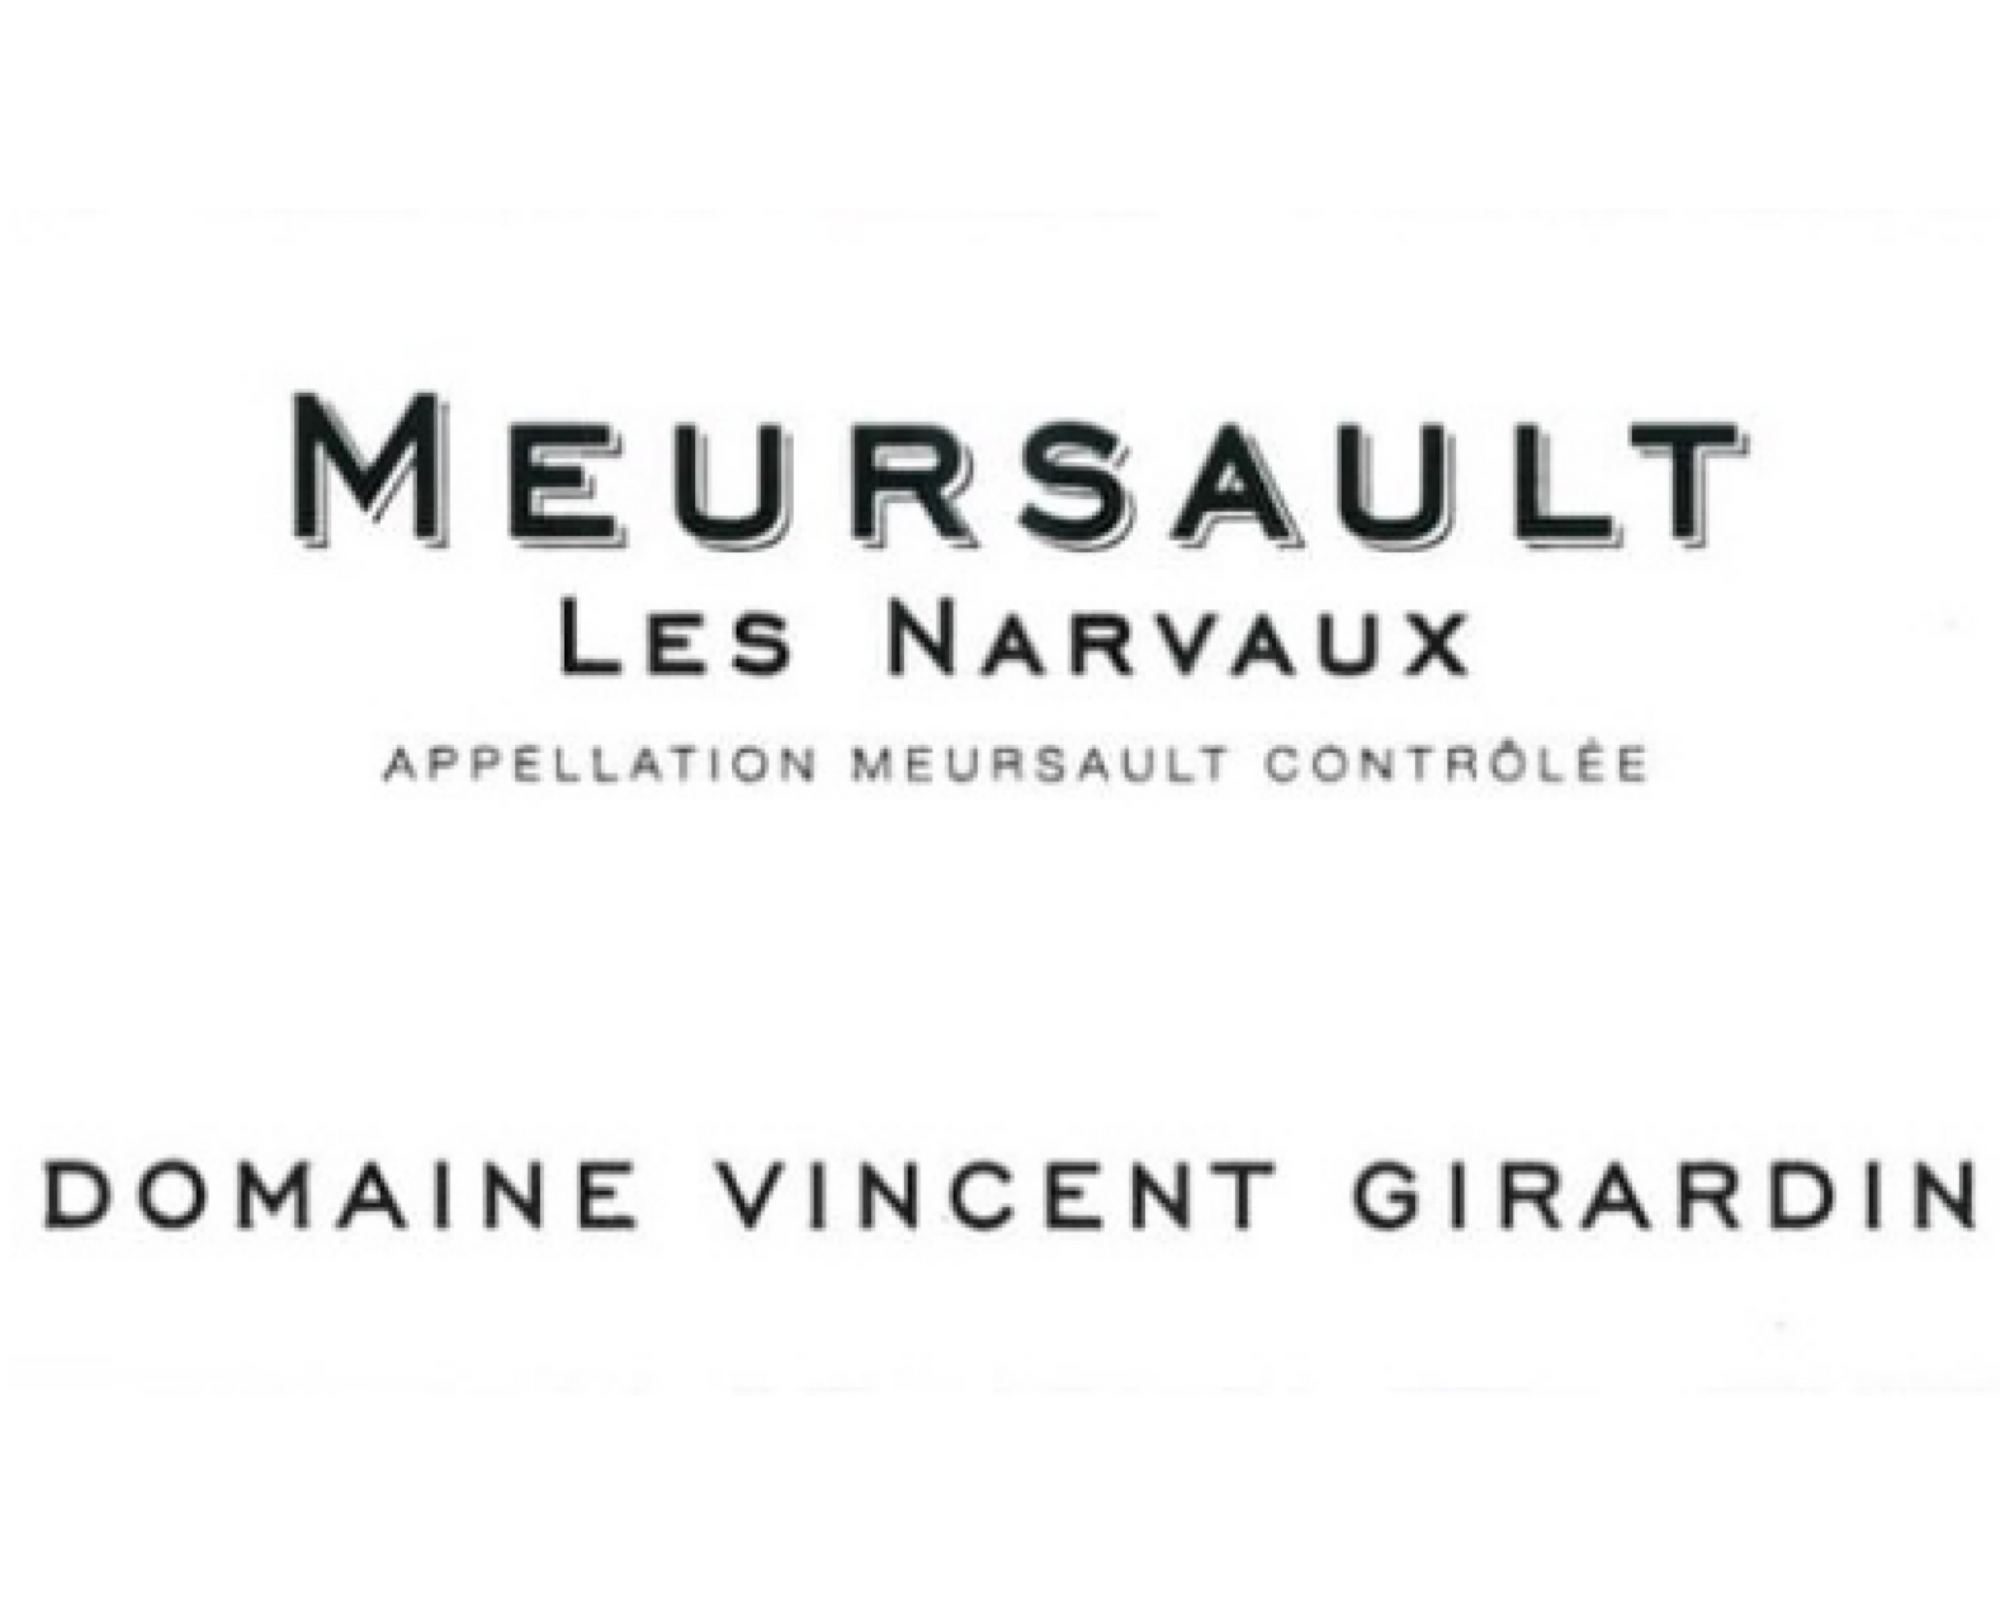 "Les Narvaux" Vincent Girardin 2019 Meursault